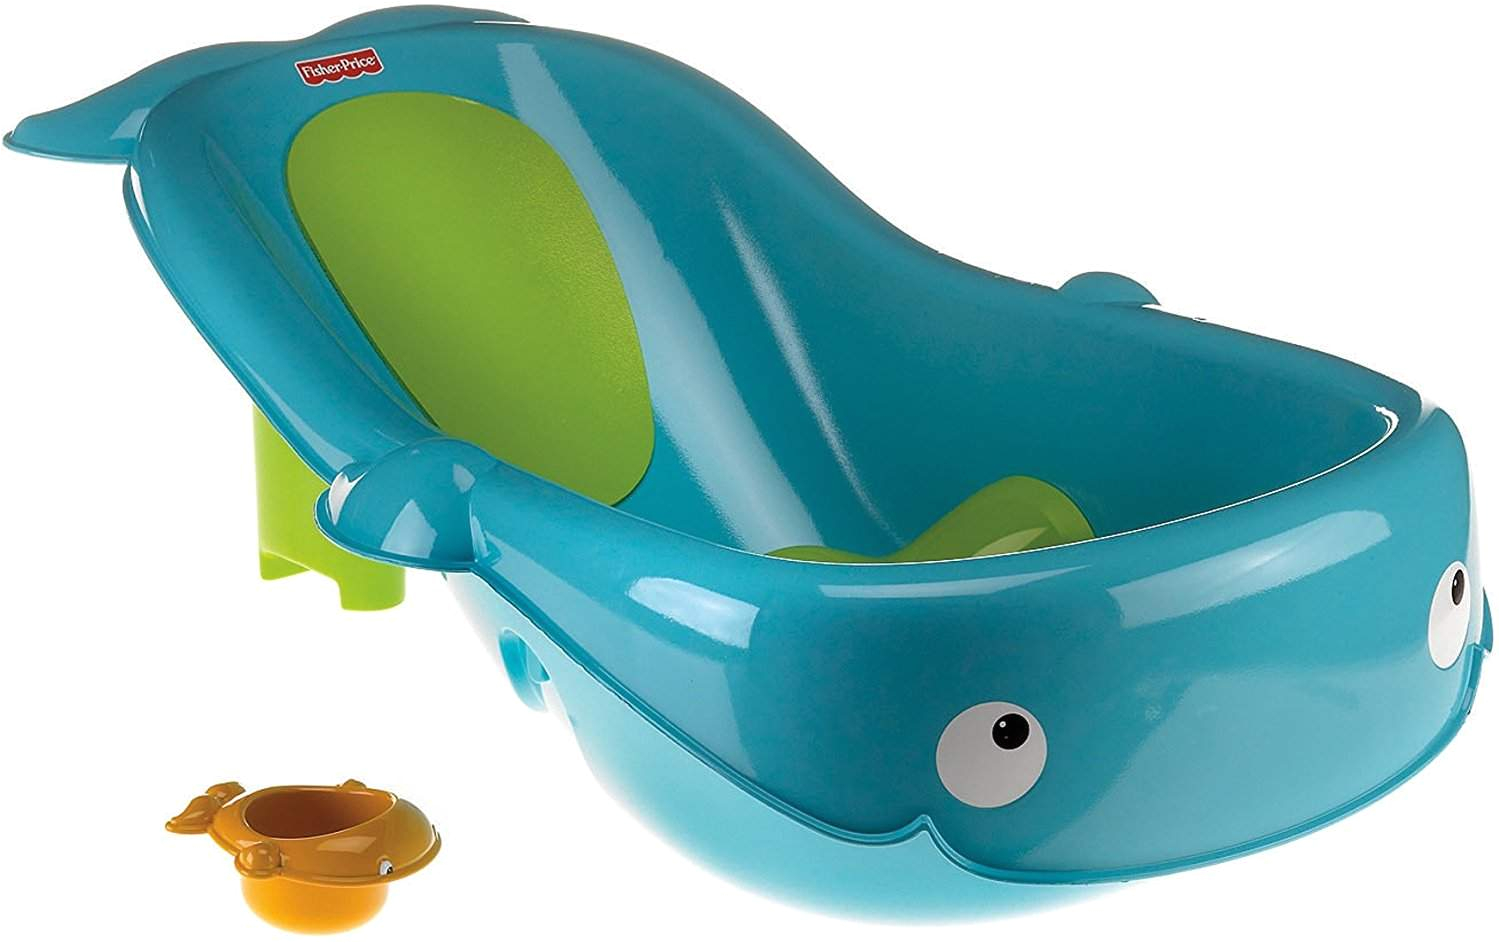 top best infant bath tub seat chair